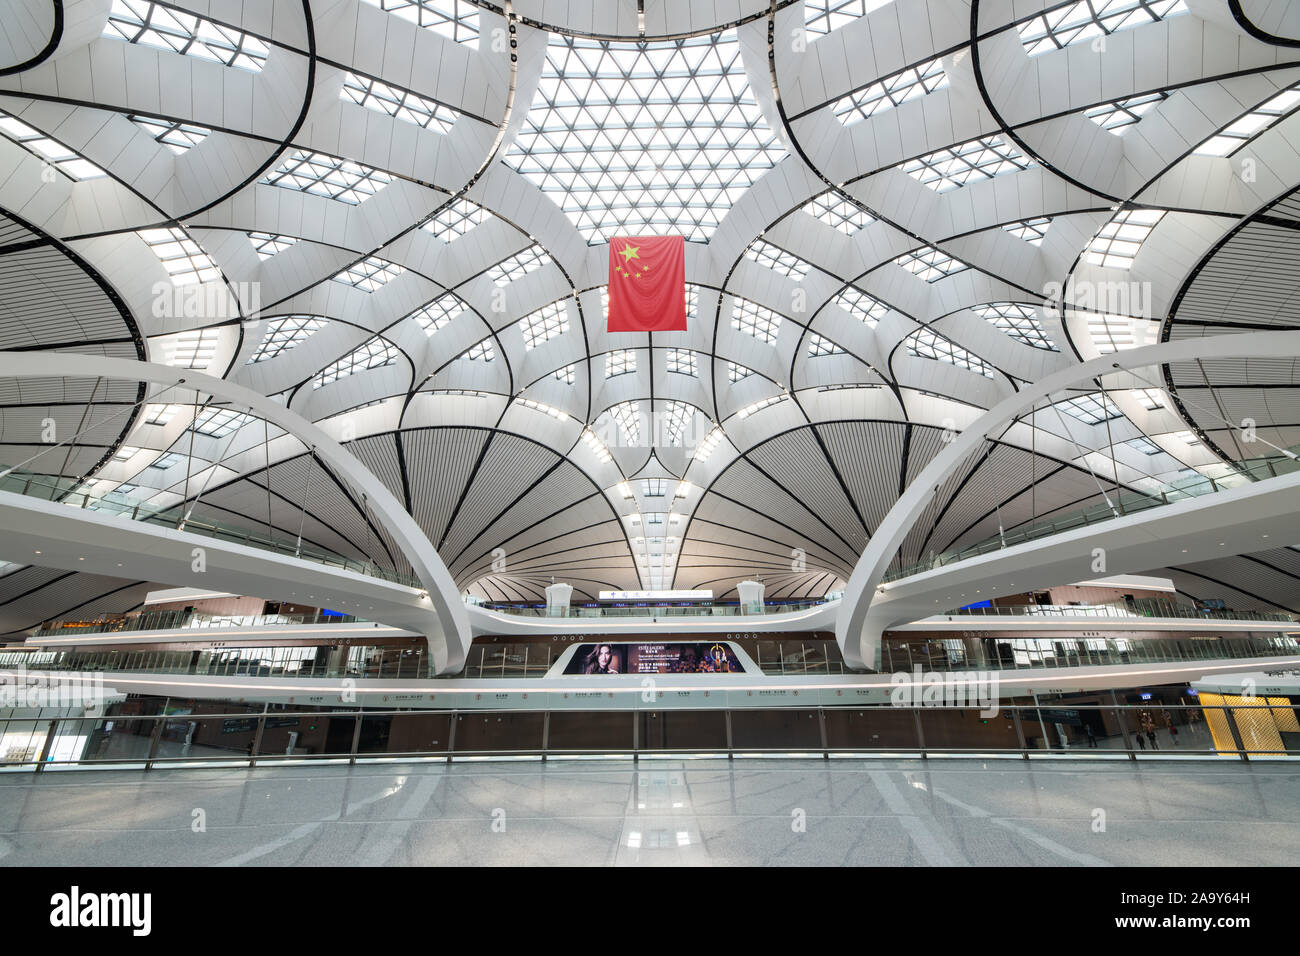 Peking, China - November 4, 2019. Innenraum der größte Flughafen der Welt, der daxing International Airport. Stockfoto